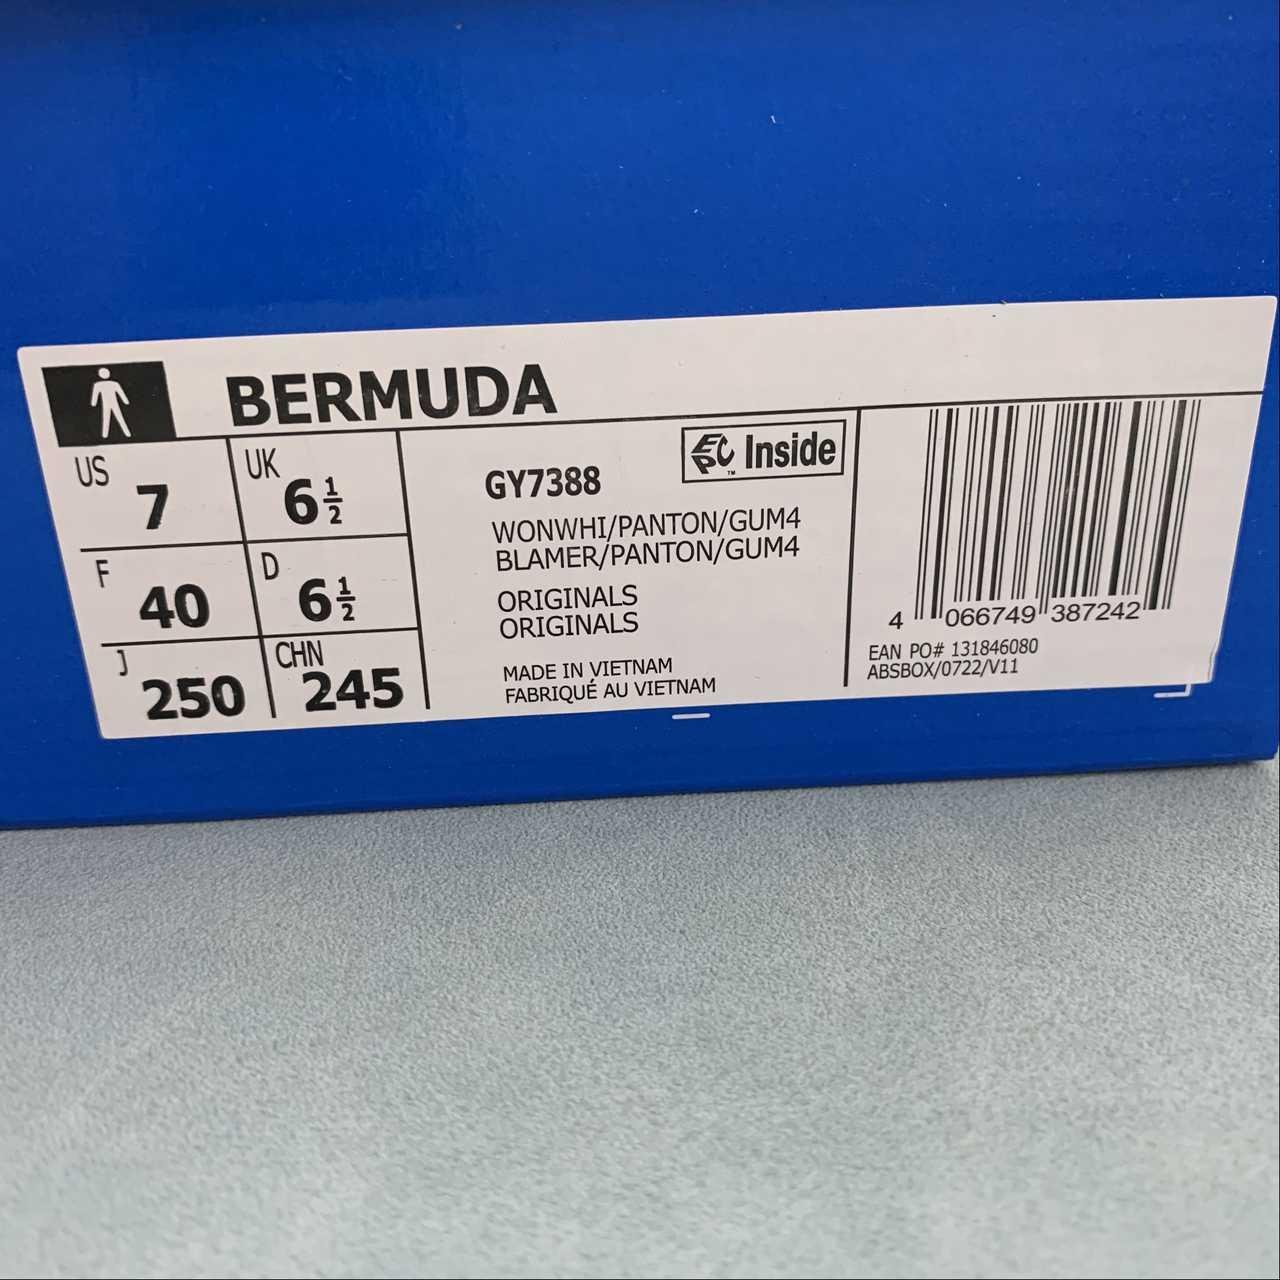        Bermuda clover campus sneakers GY7388 5